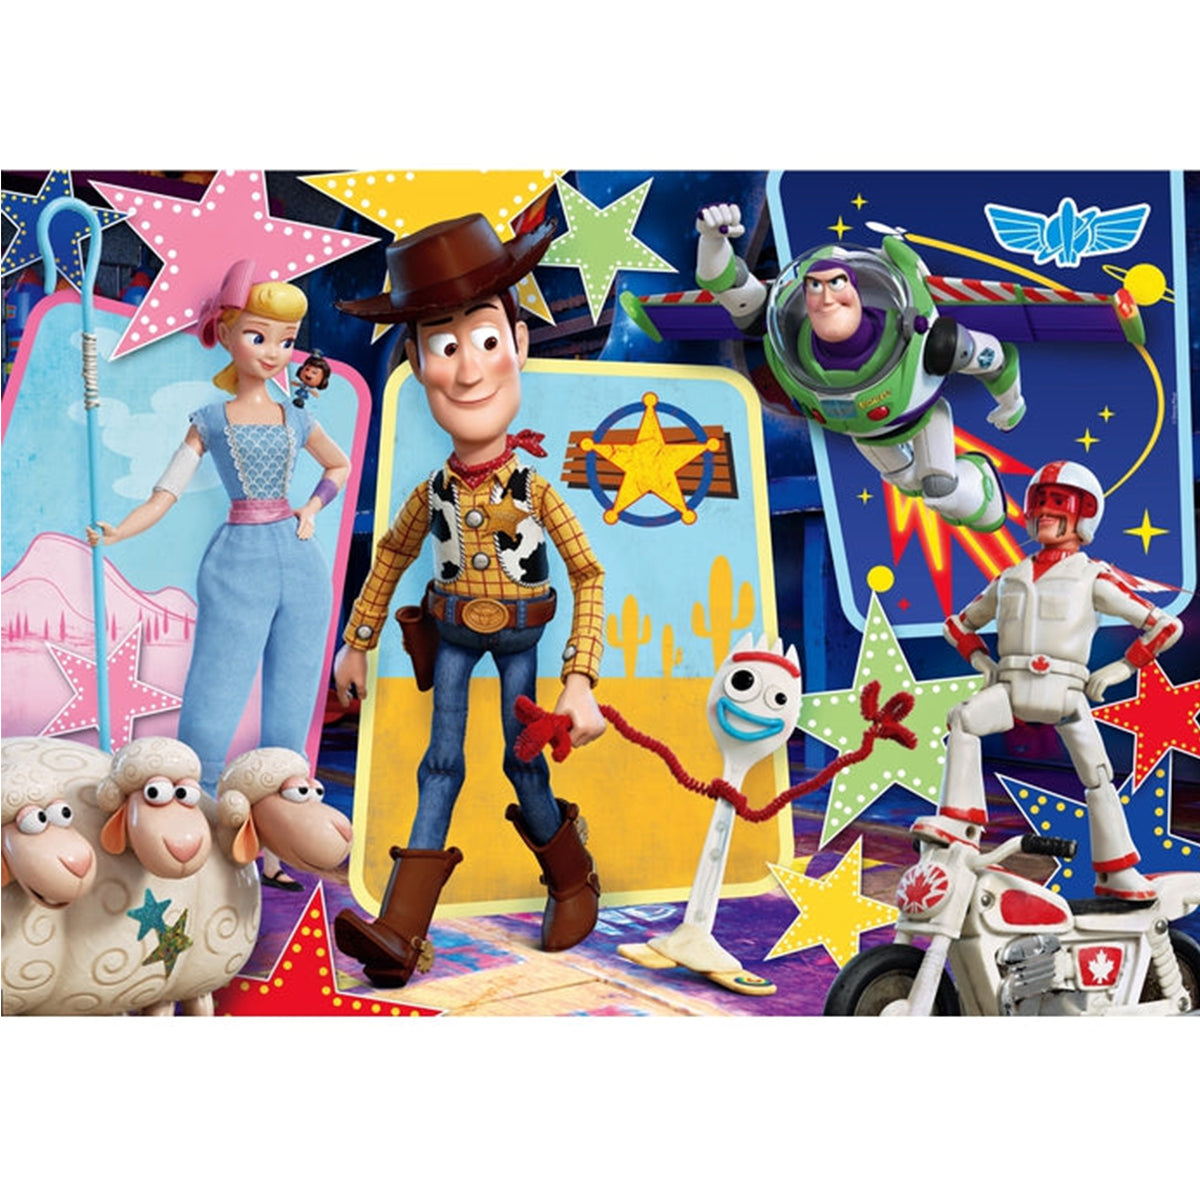 Clementoni - Disney Toy Story 4 - 104 Pcs